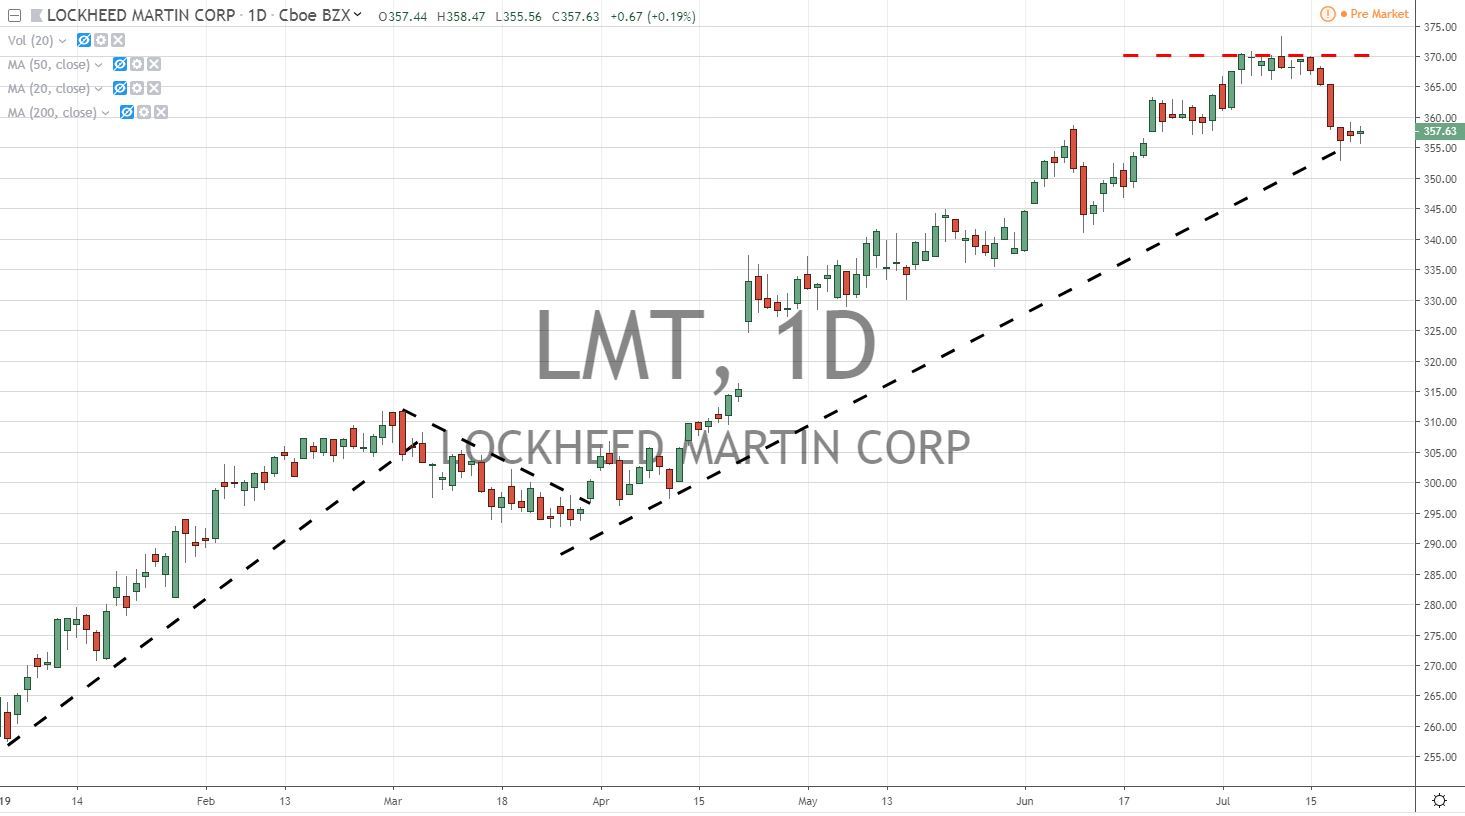 Lockheed Martin Corp LMT Stock Chart 7.23.19 Before Earnings